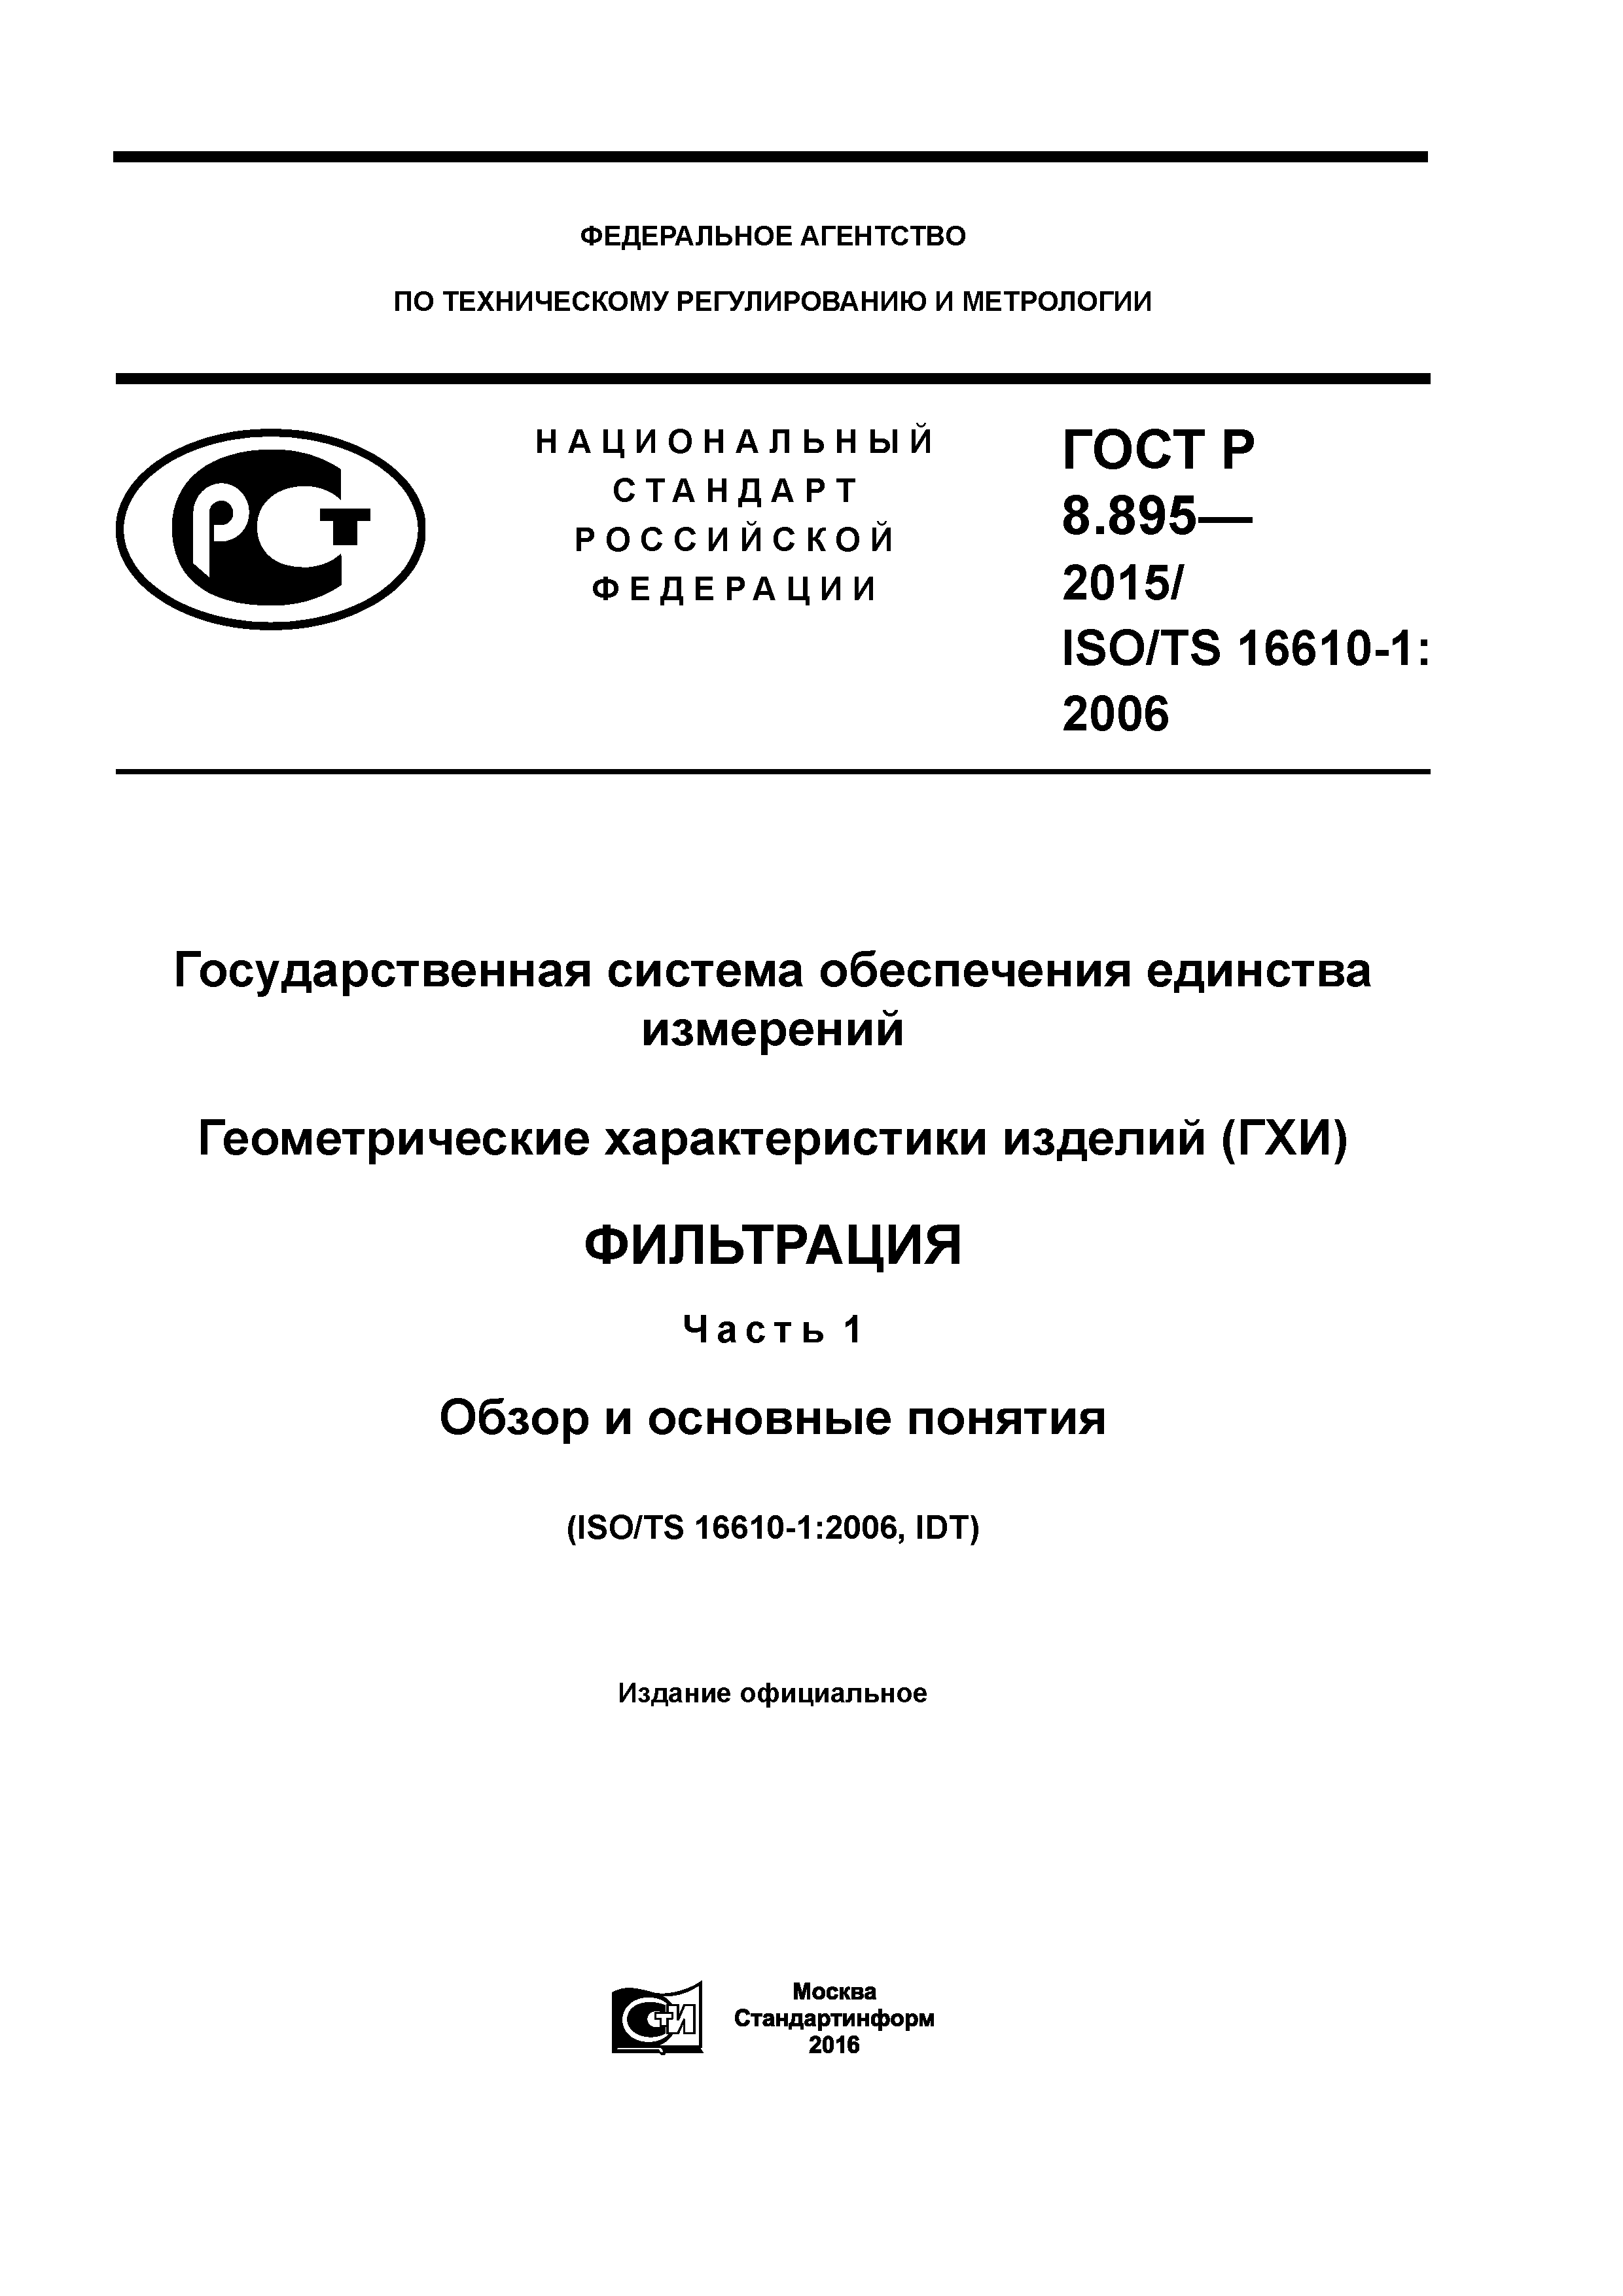 ГОСТ Р 8.895-2015